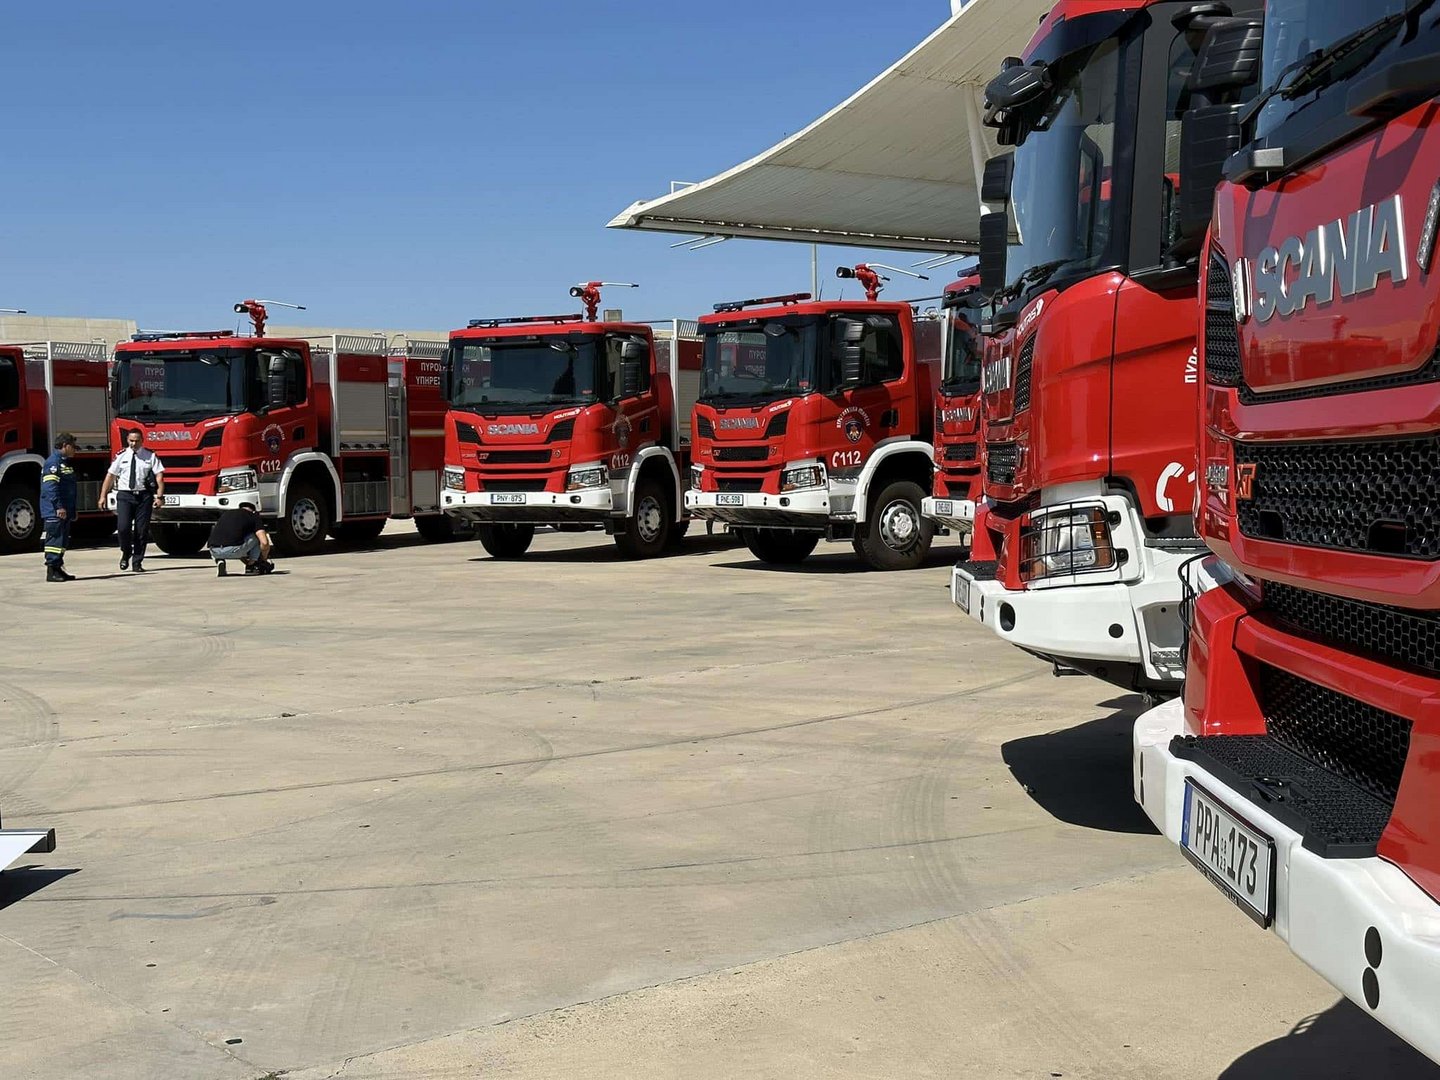 Fire brigade budget €12m higher than last year